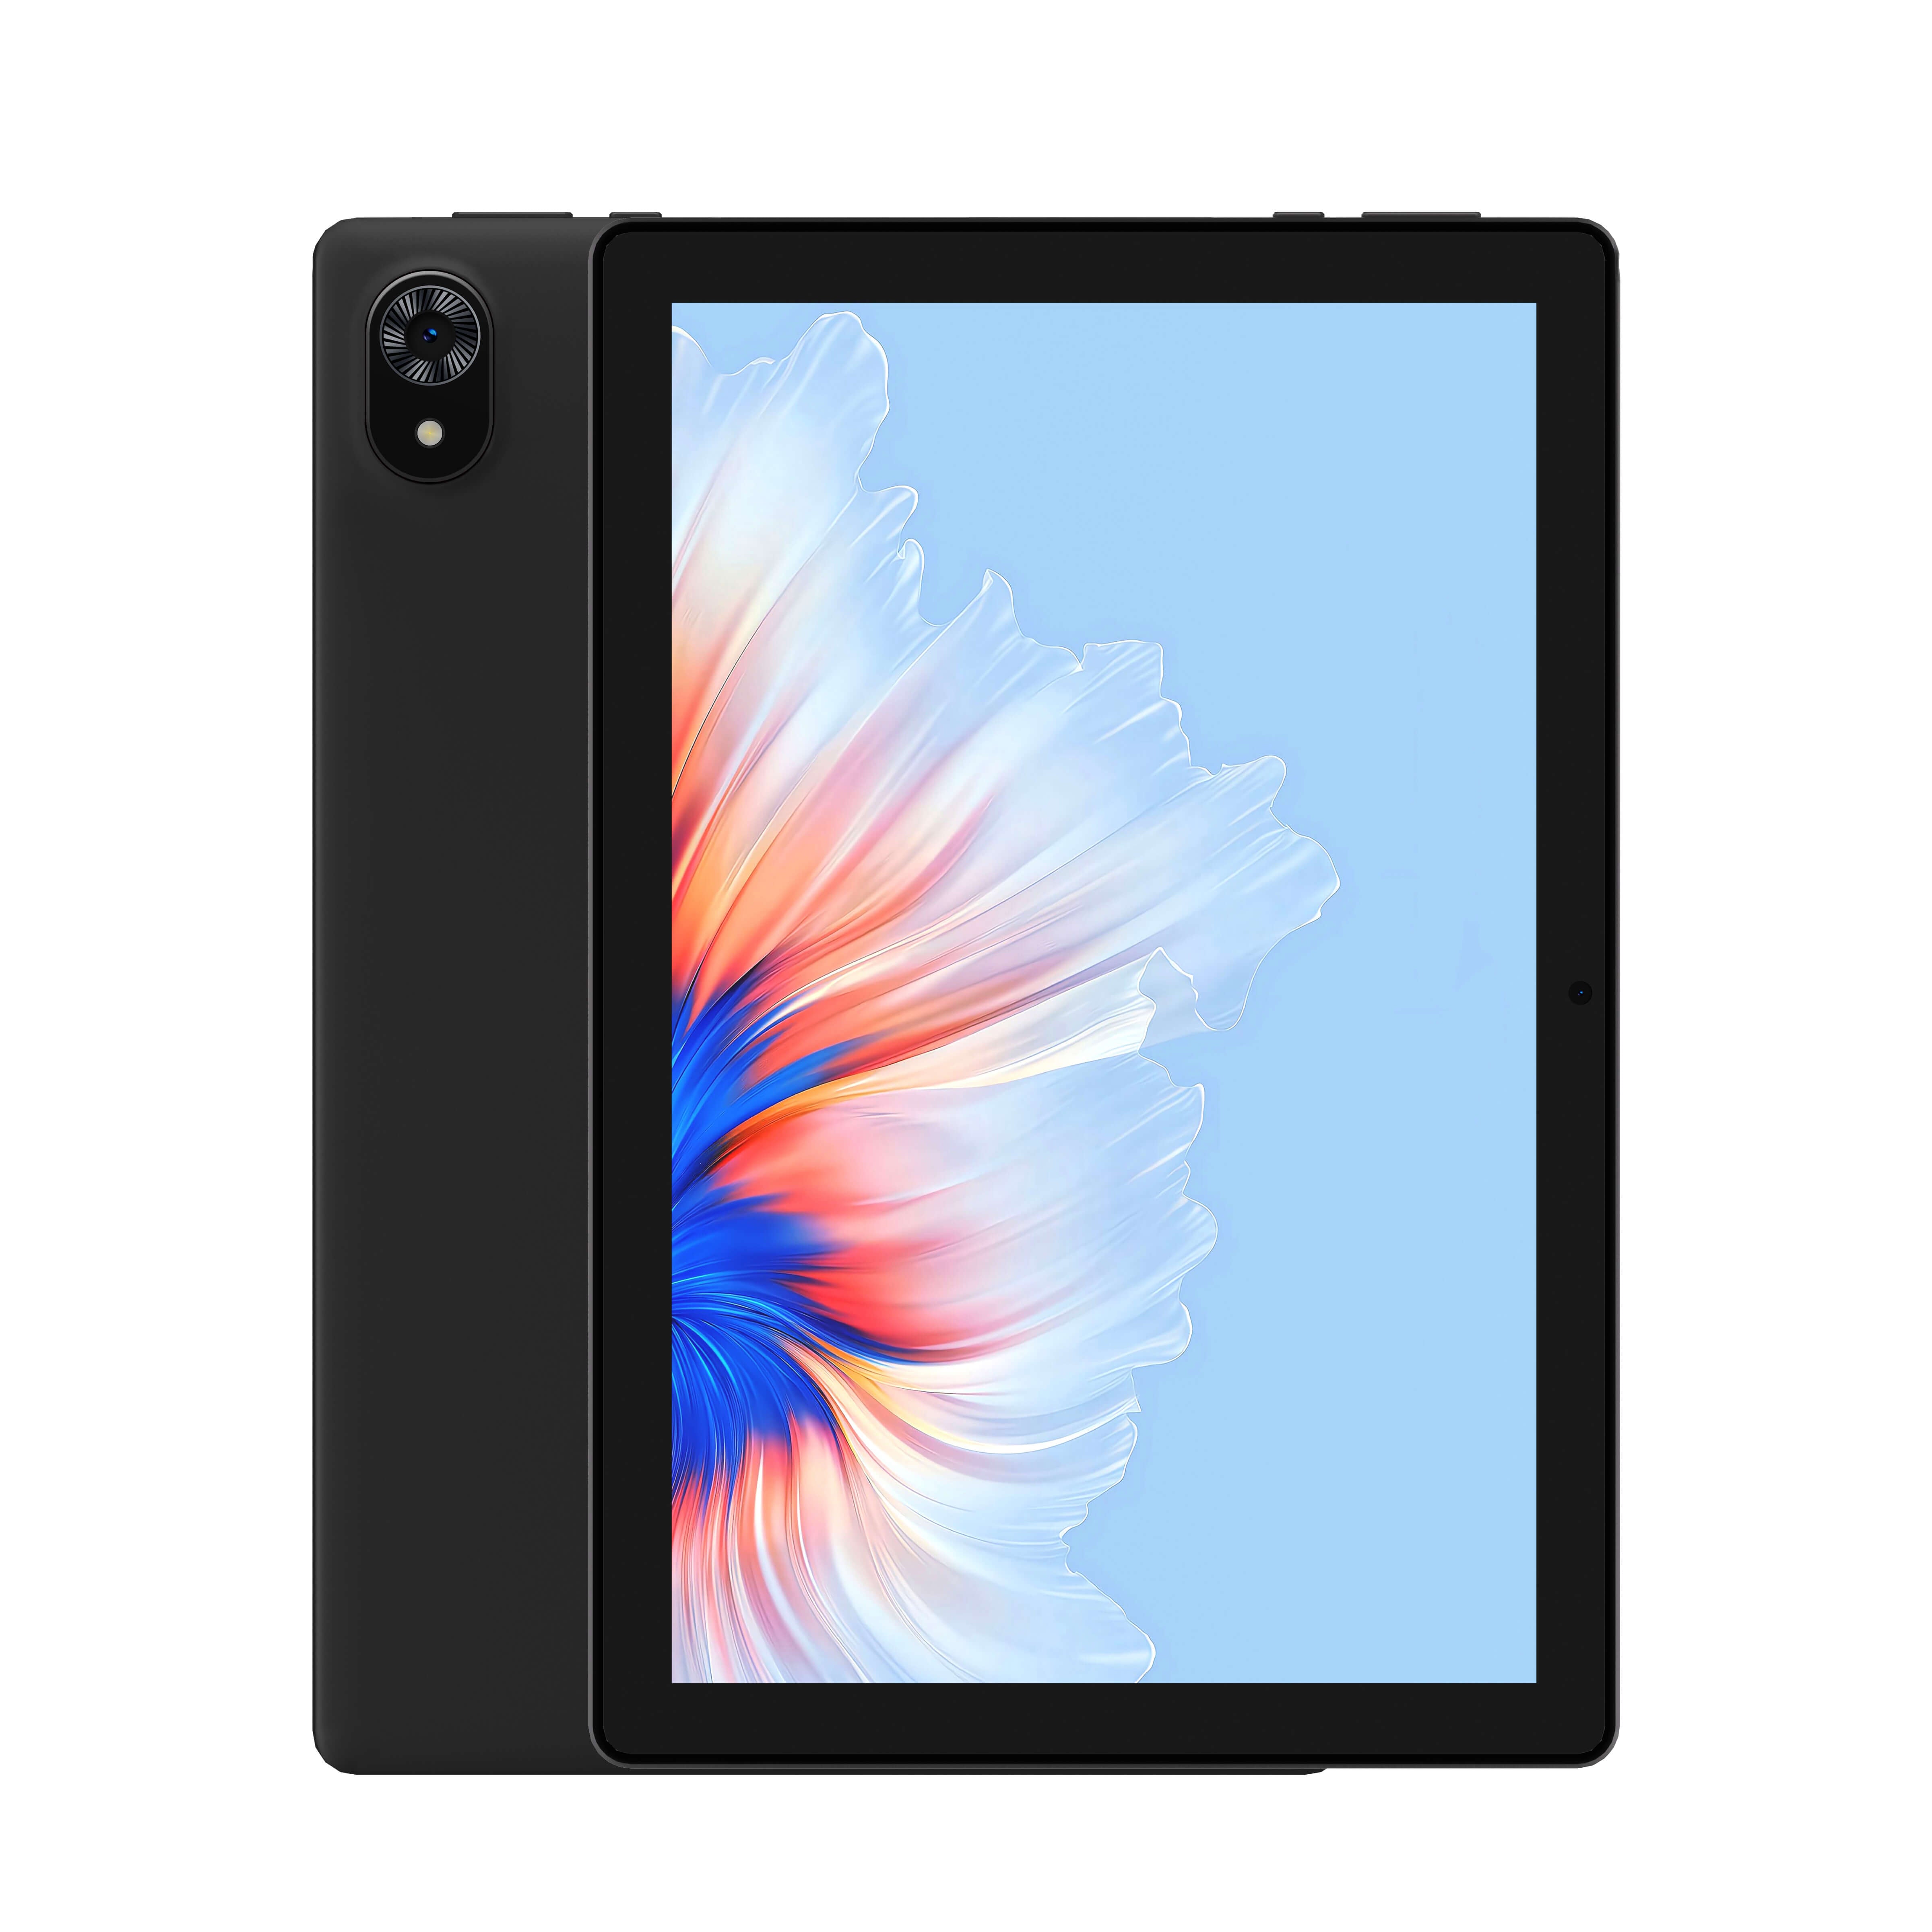 DOOGEE U9 Tablet PC 10.1" IPS HD Display